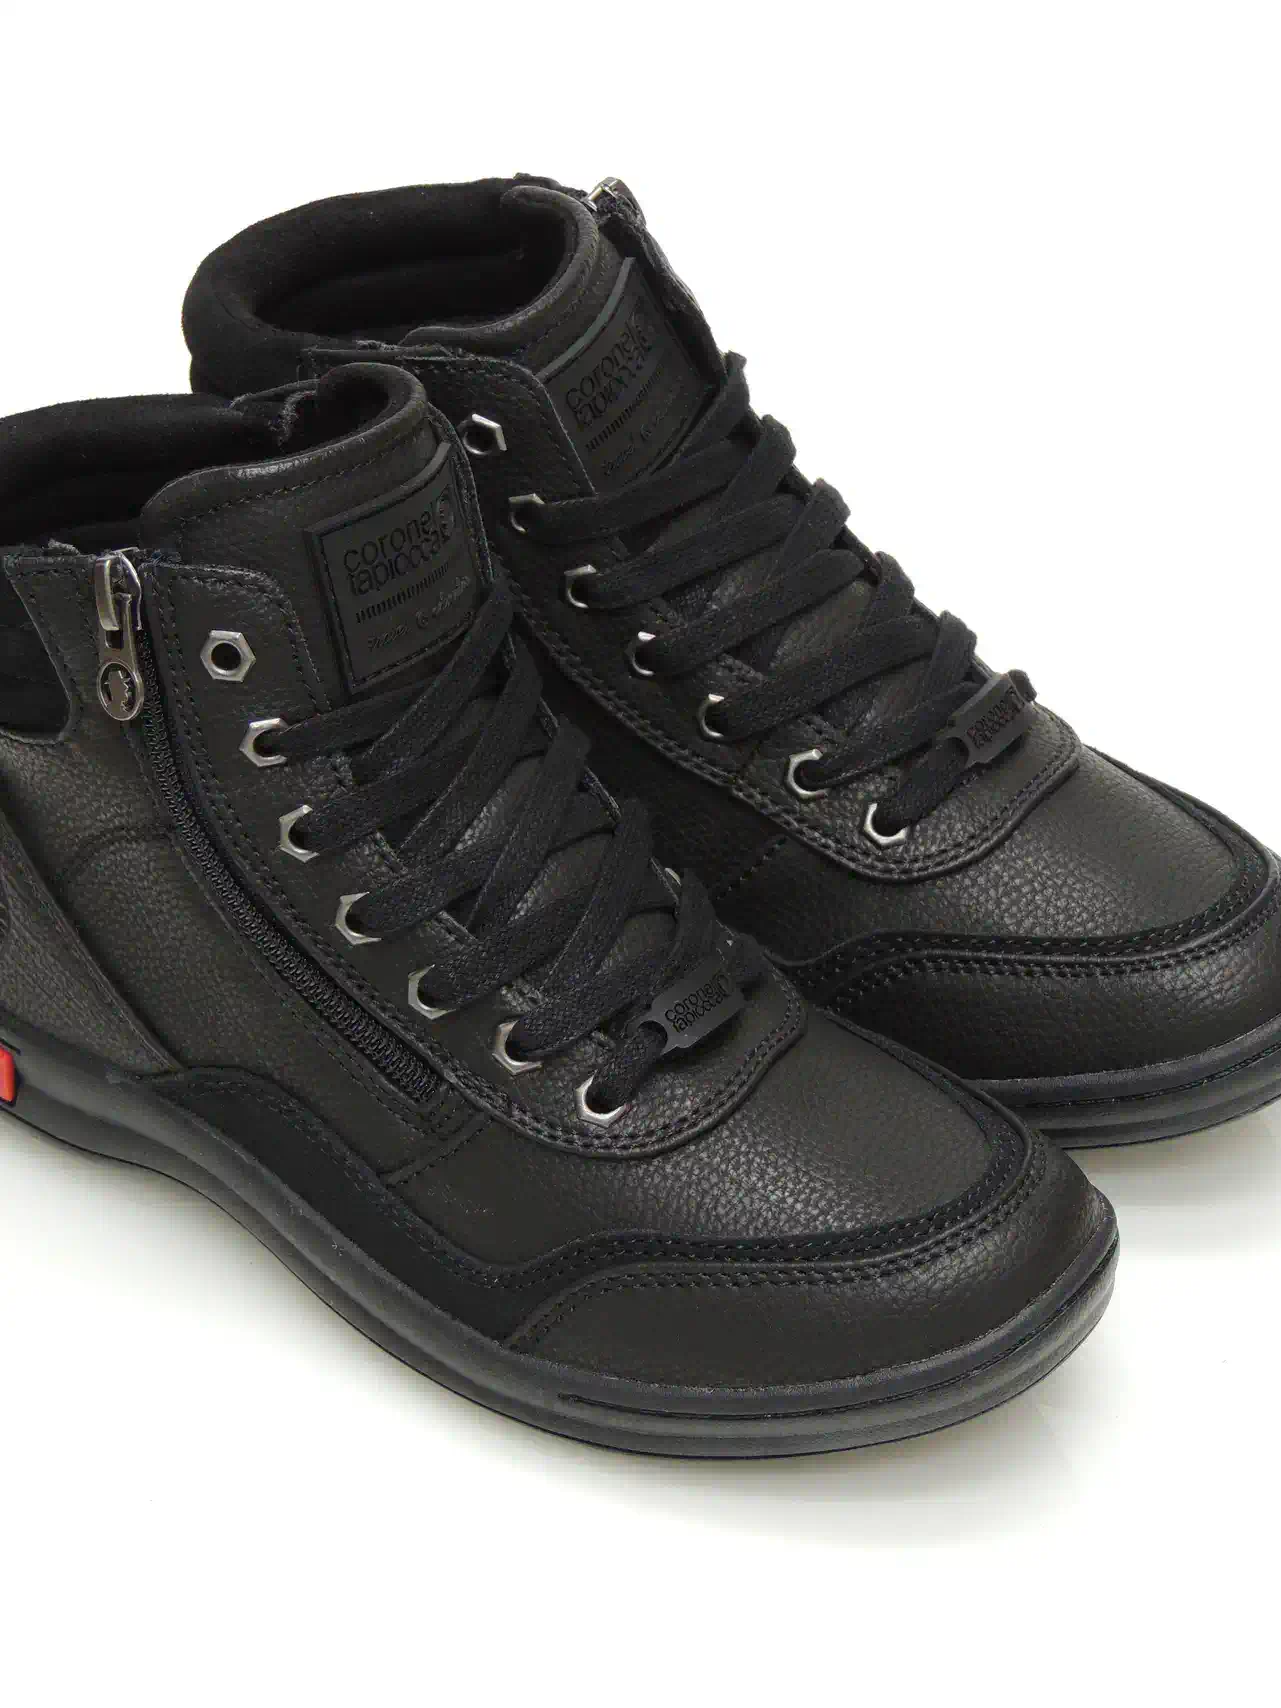 sneakers--coronel tapiocca-t465-1-piel-negro